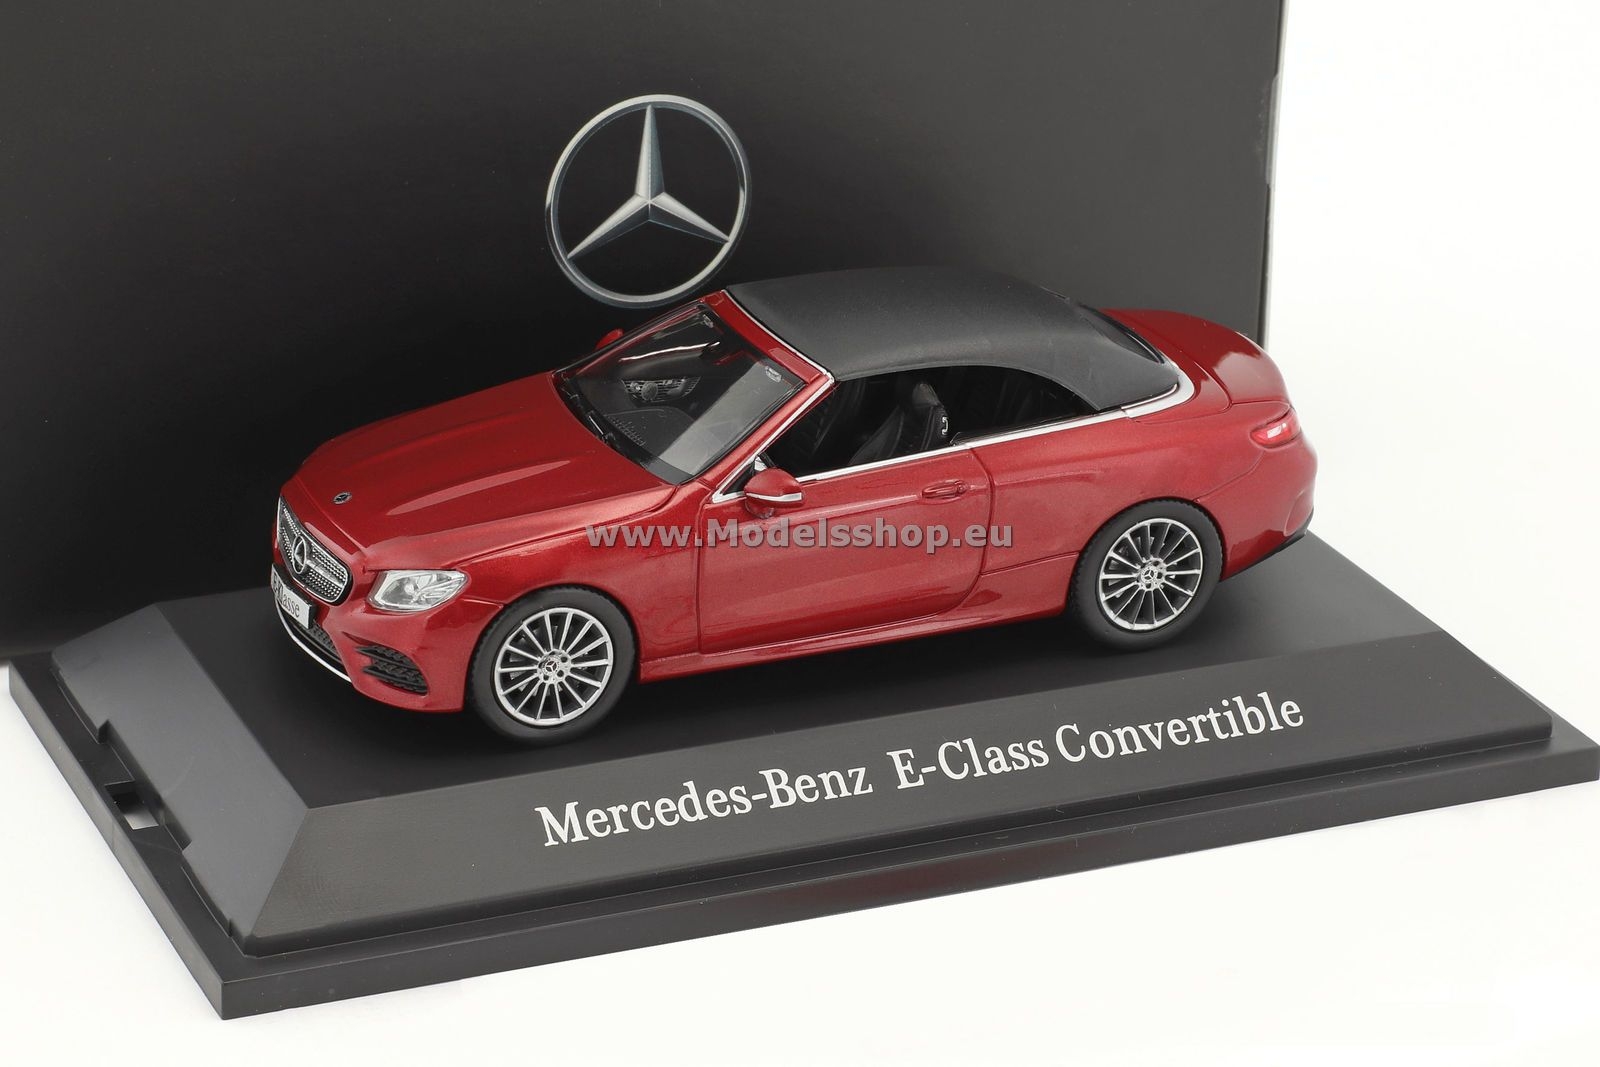 Mercedes-Benz E-class Convertible/metallic-red/